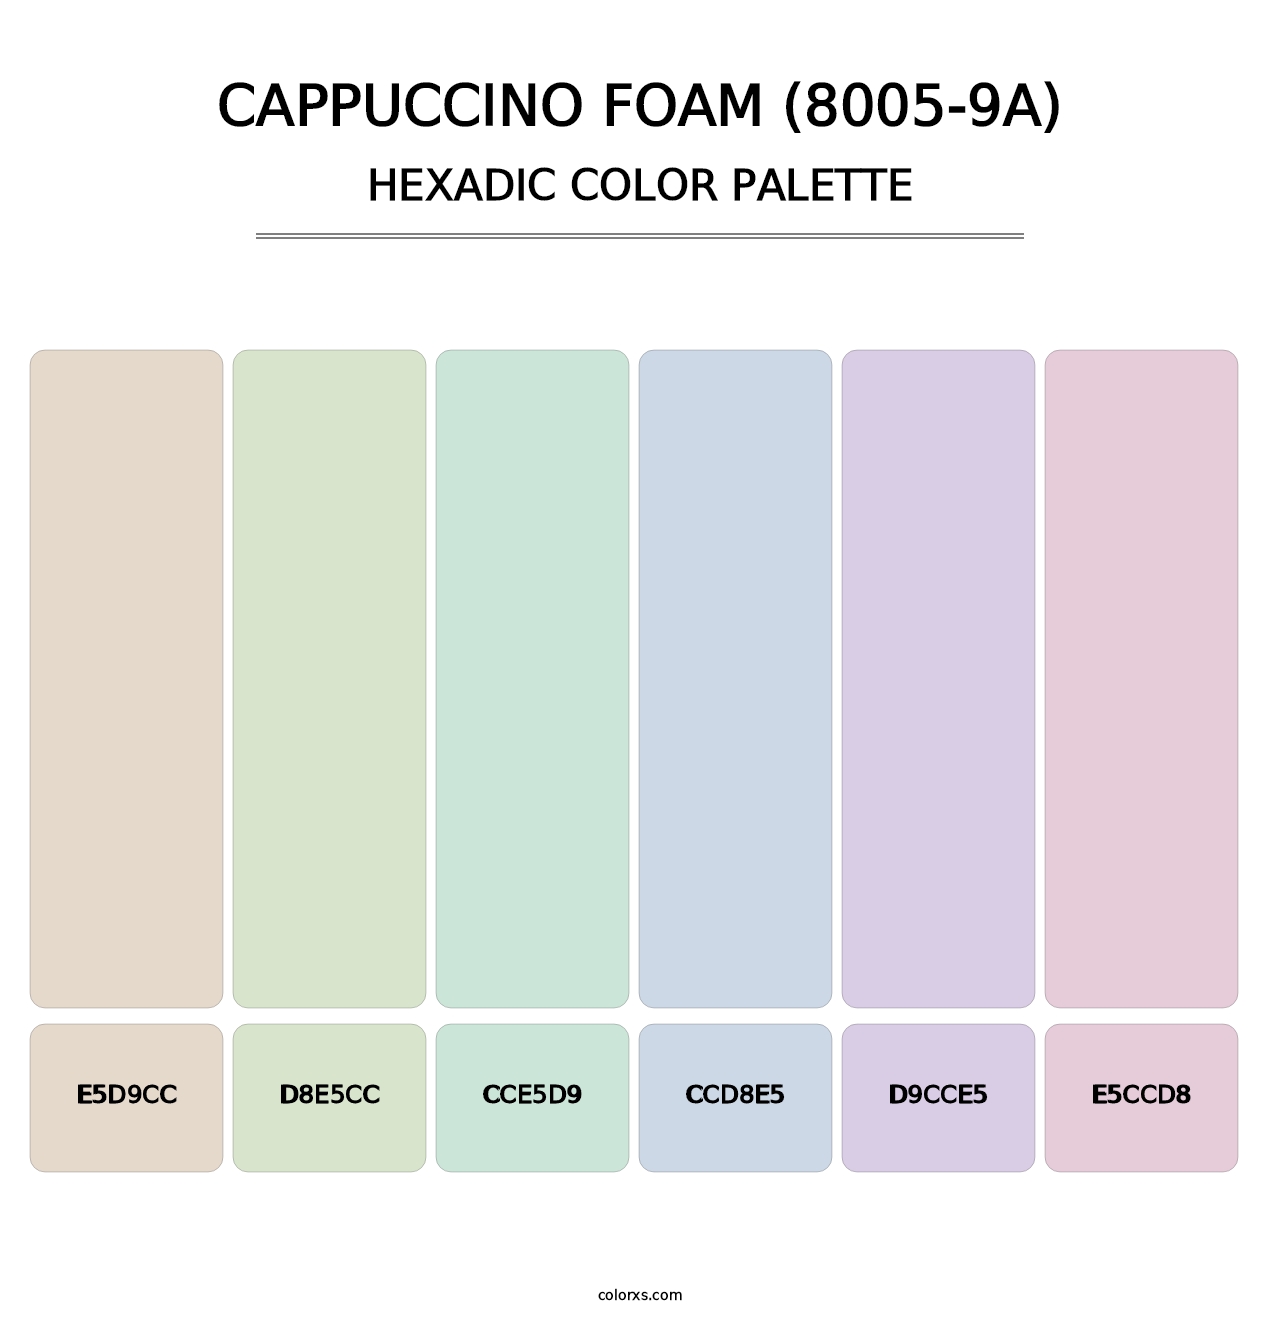 Cappuccino Foam (8005-9A) - Hexadic Color Palette